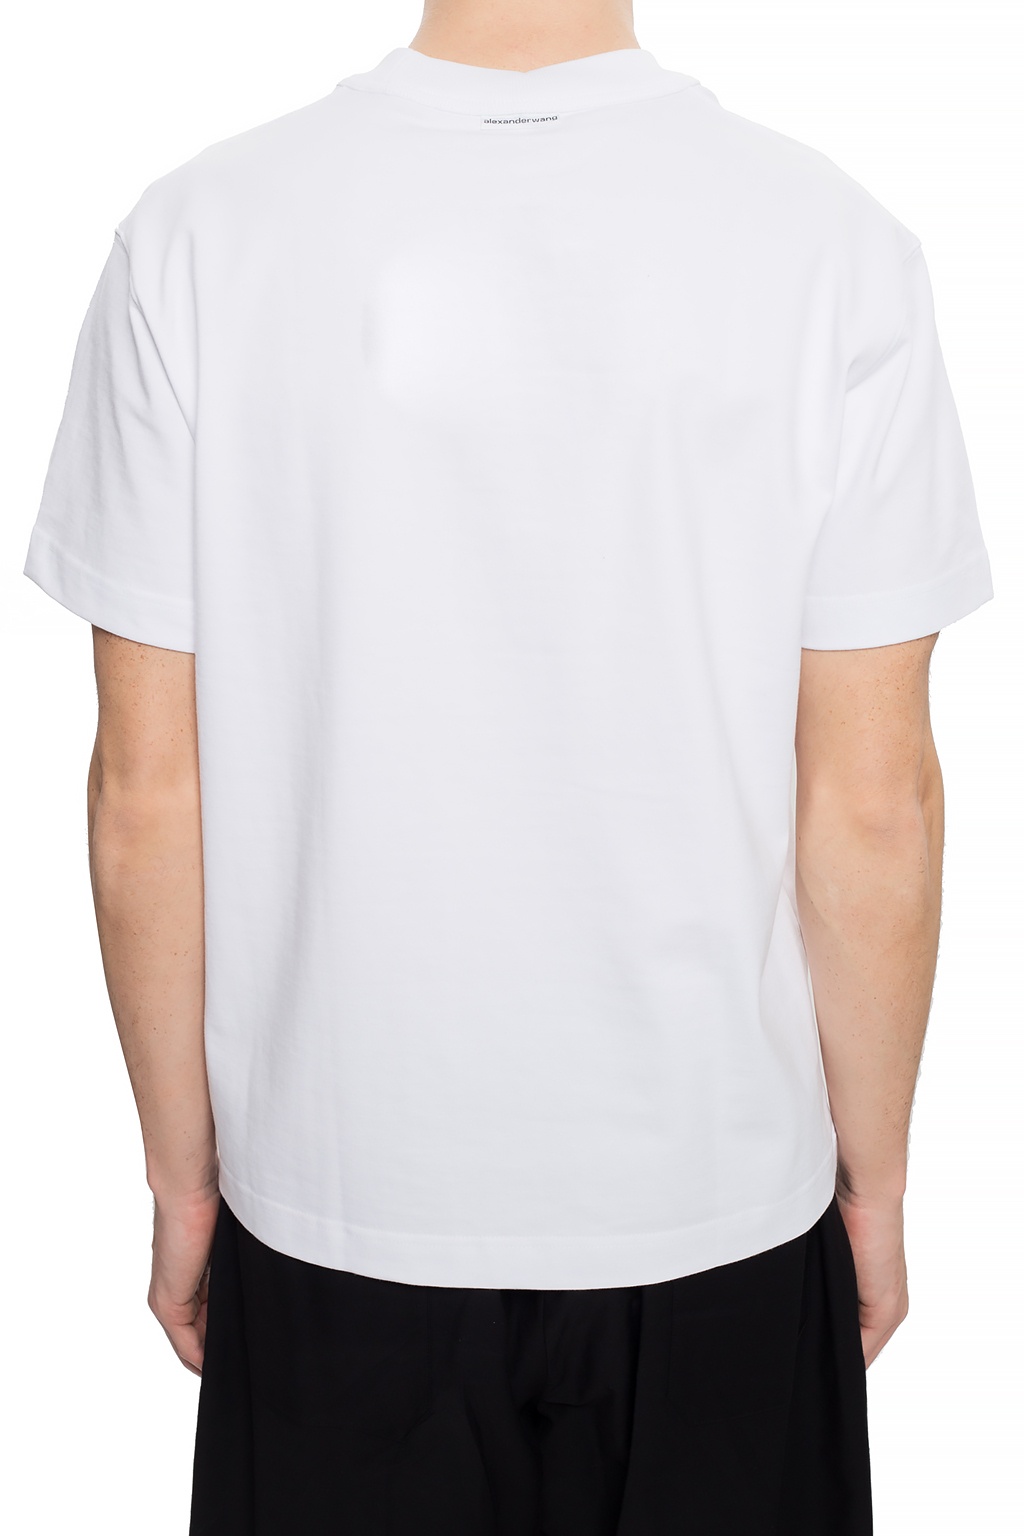 Alexander Wang Short Sleeved Crewneck T-shirt in White for Men